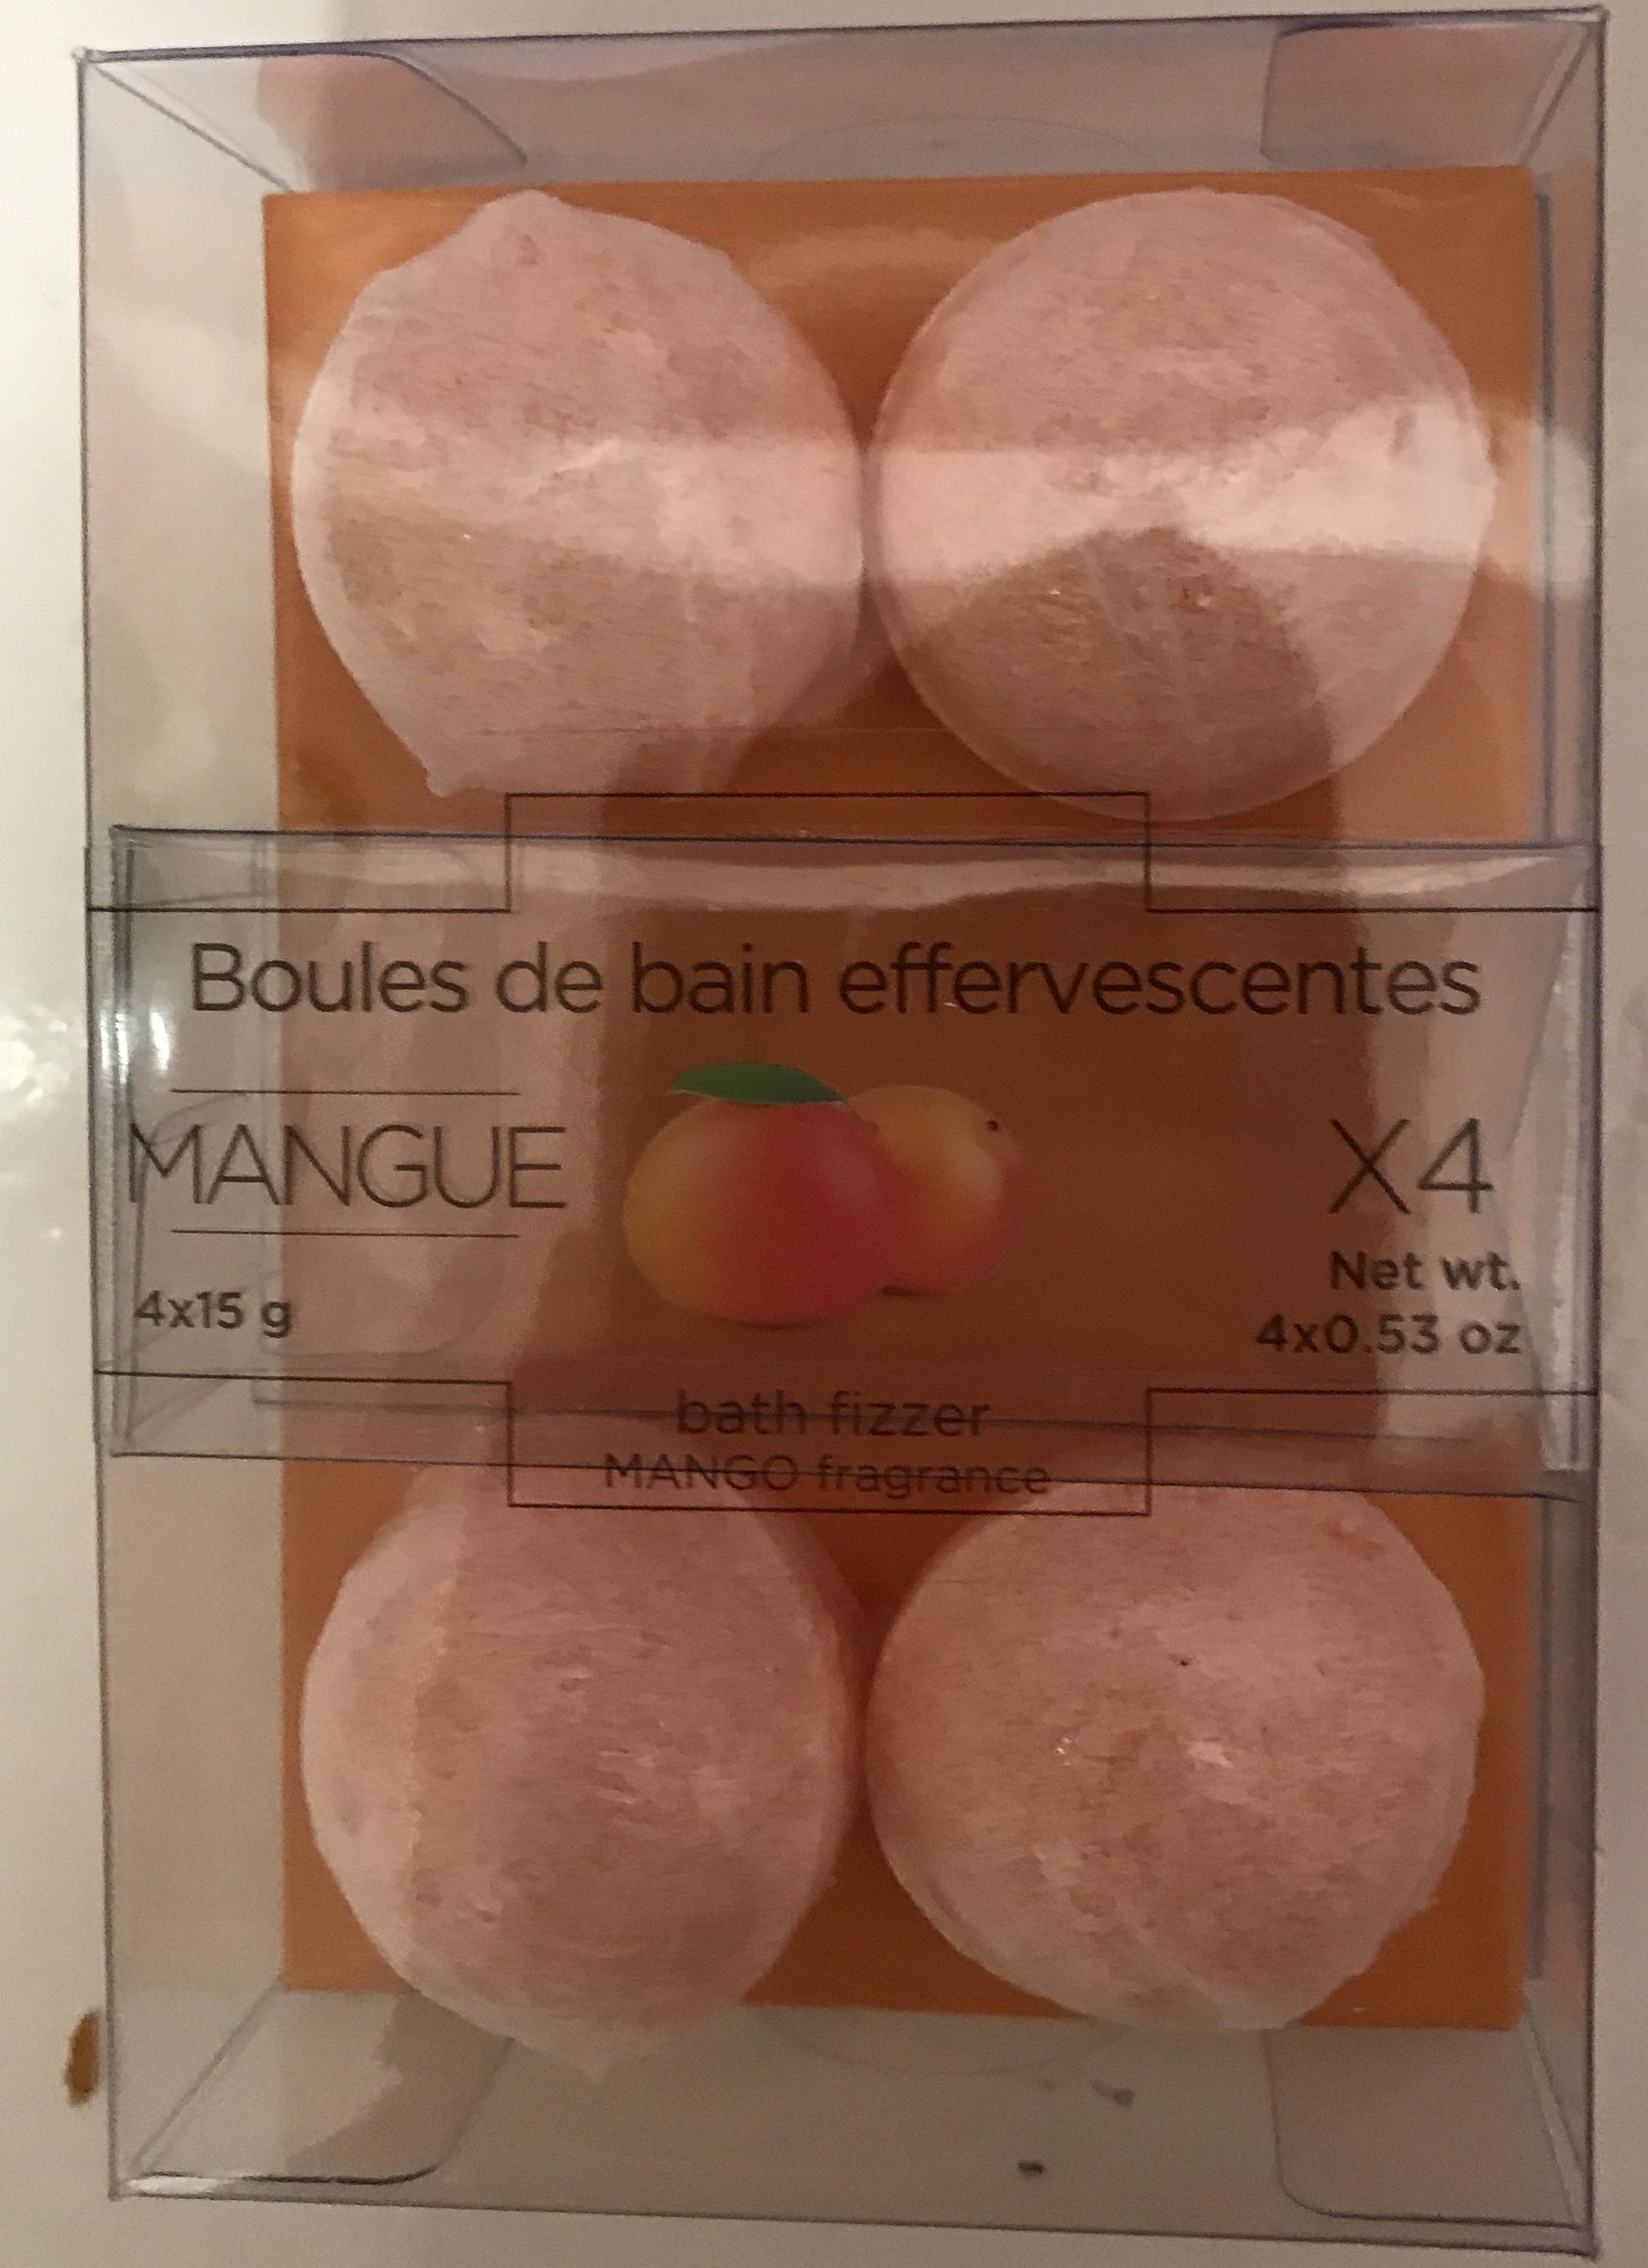 Boules de bain effervescentes Mangue - Produit - fr